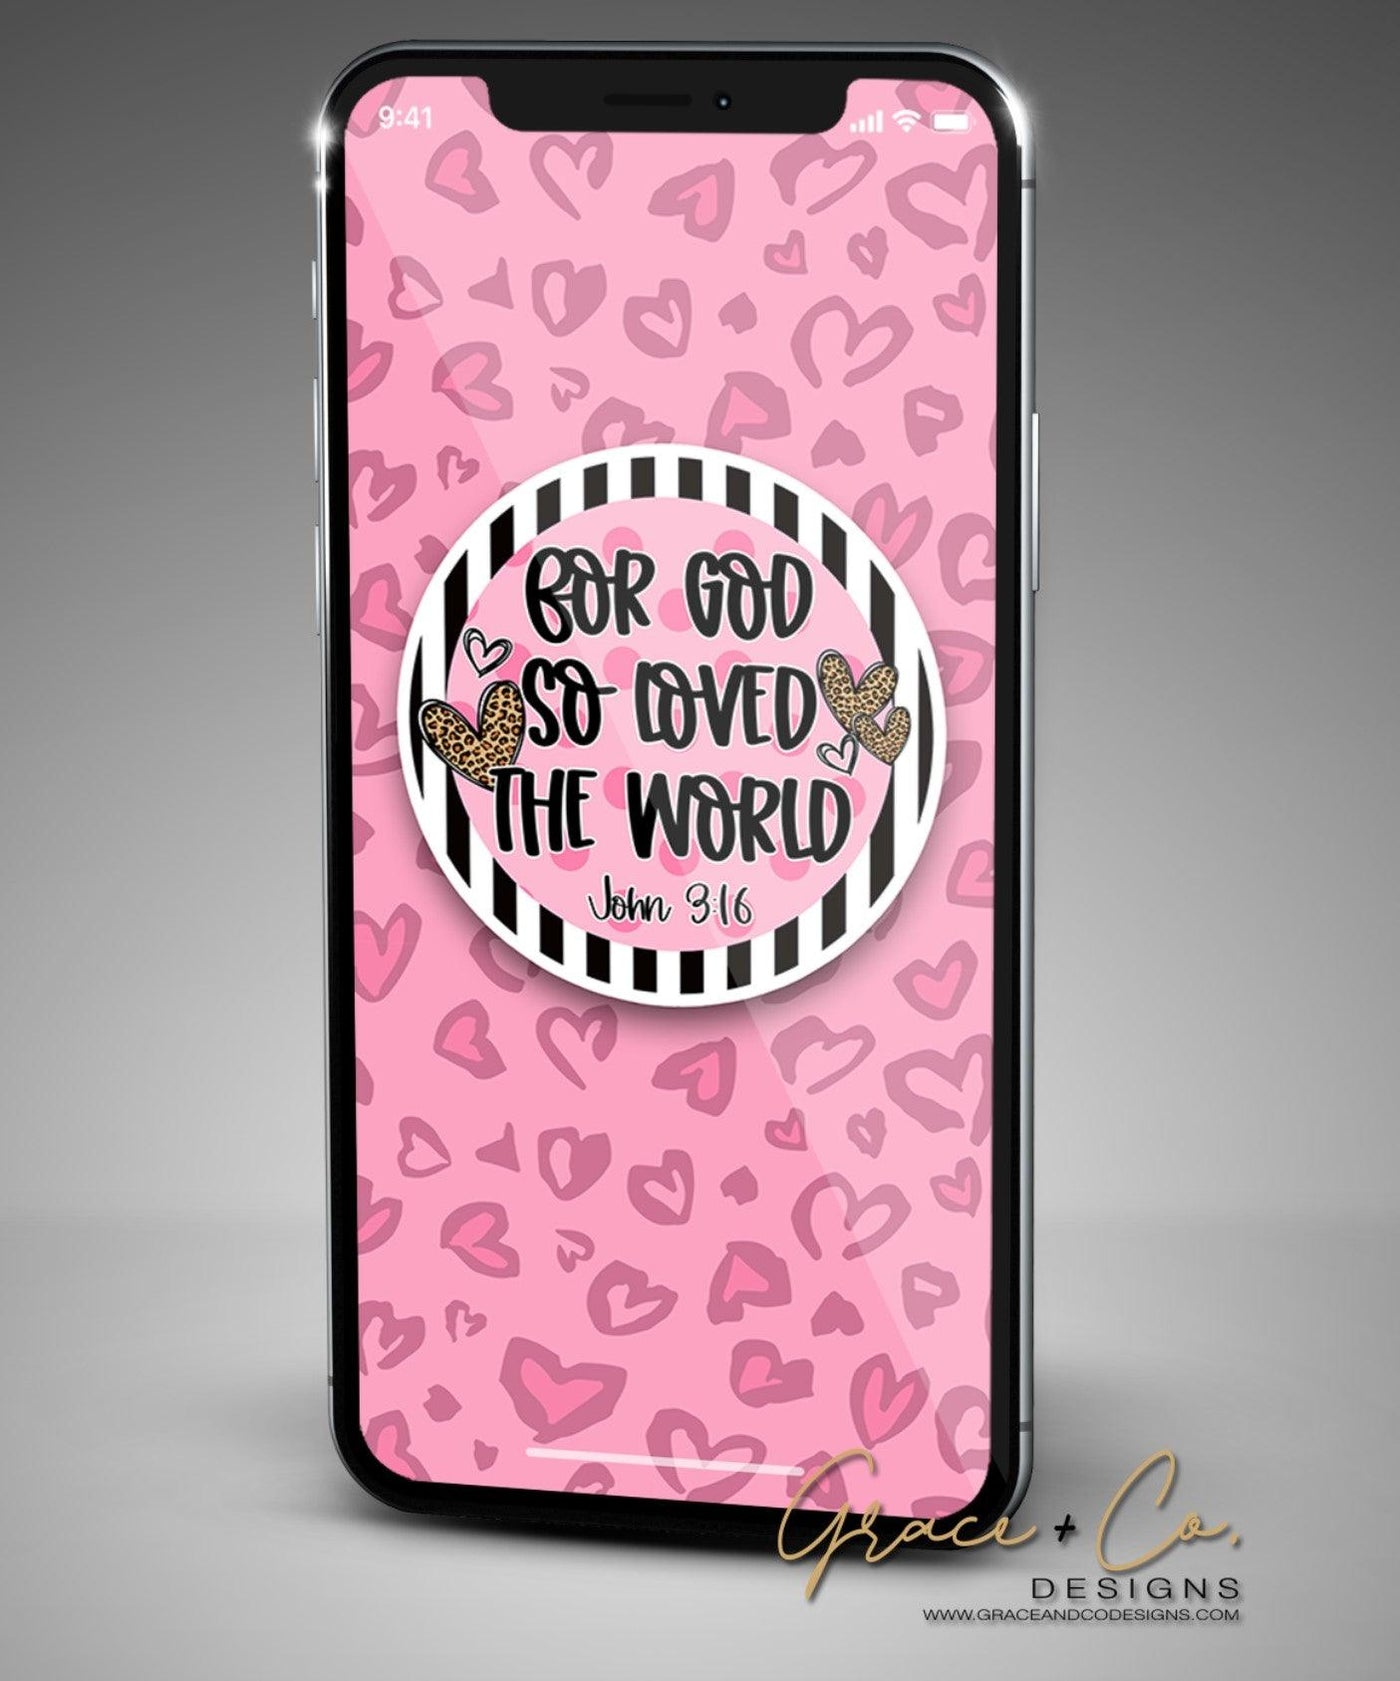 For God So Loved The World - Phone Wallpaper - Grace & Co. Designs 